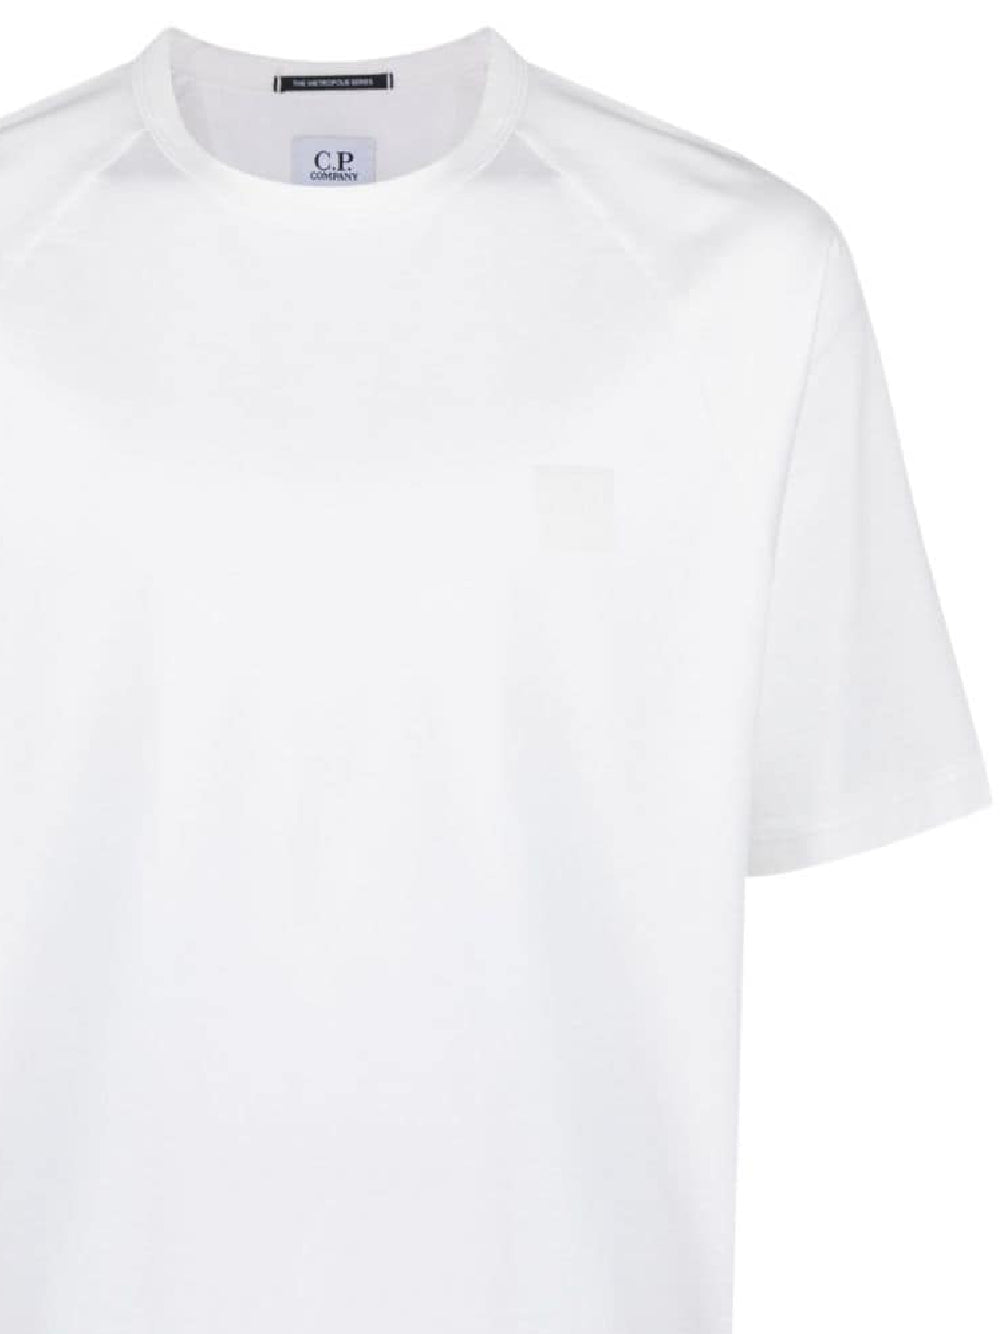 C.P. COMPANY 16CLTS020A00 Man White T-shirts and Polos - Zuklat